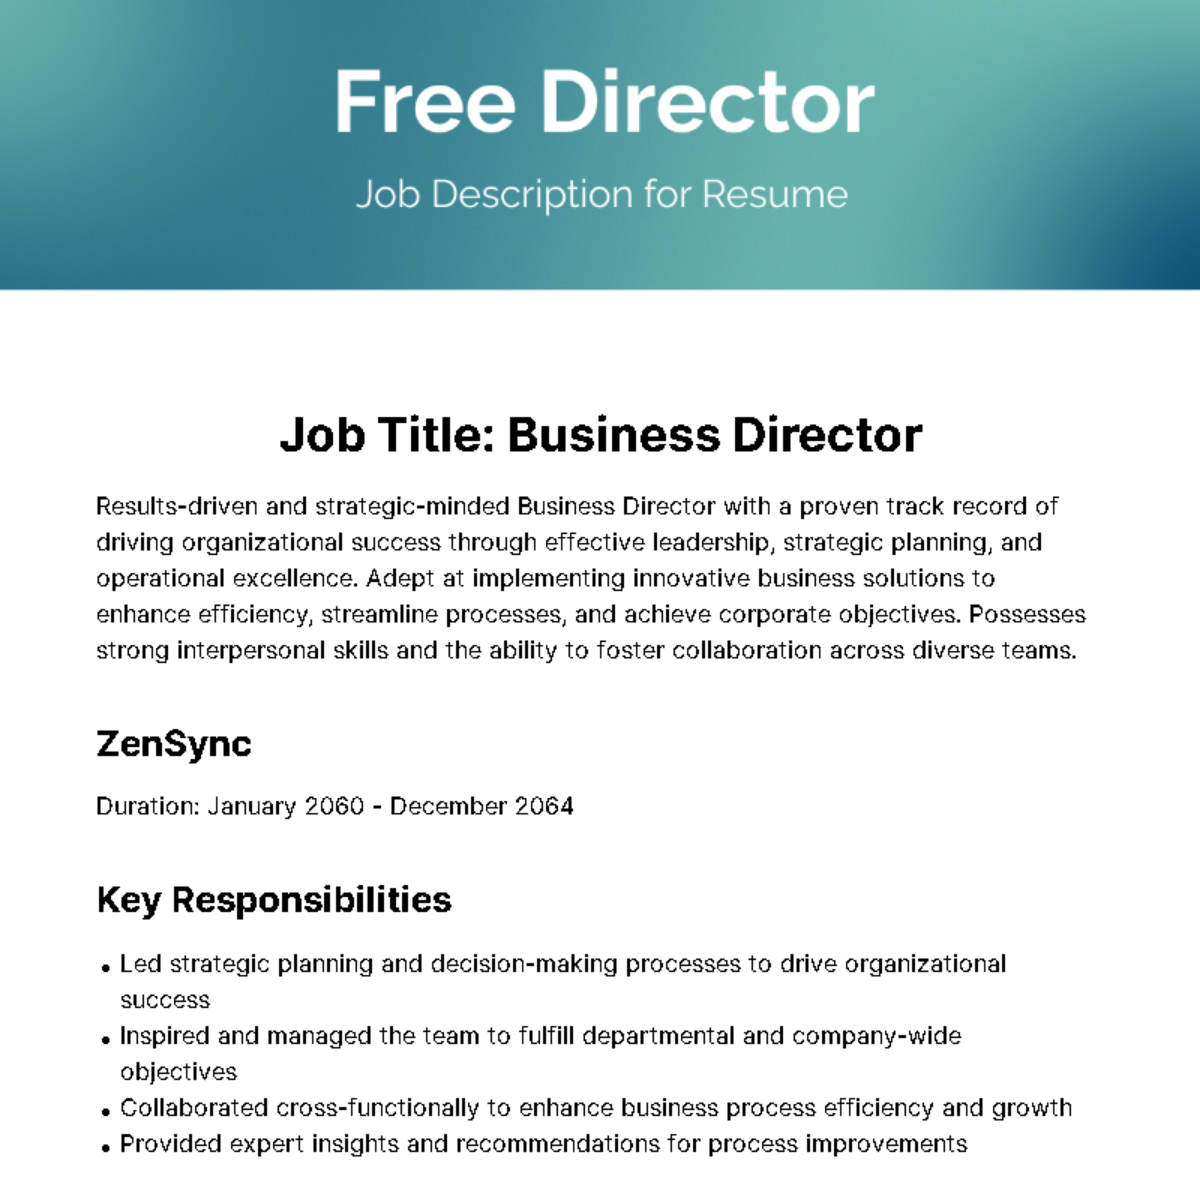 Director Job Description for Resume Template